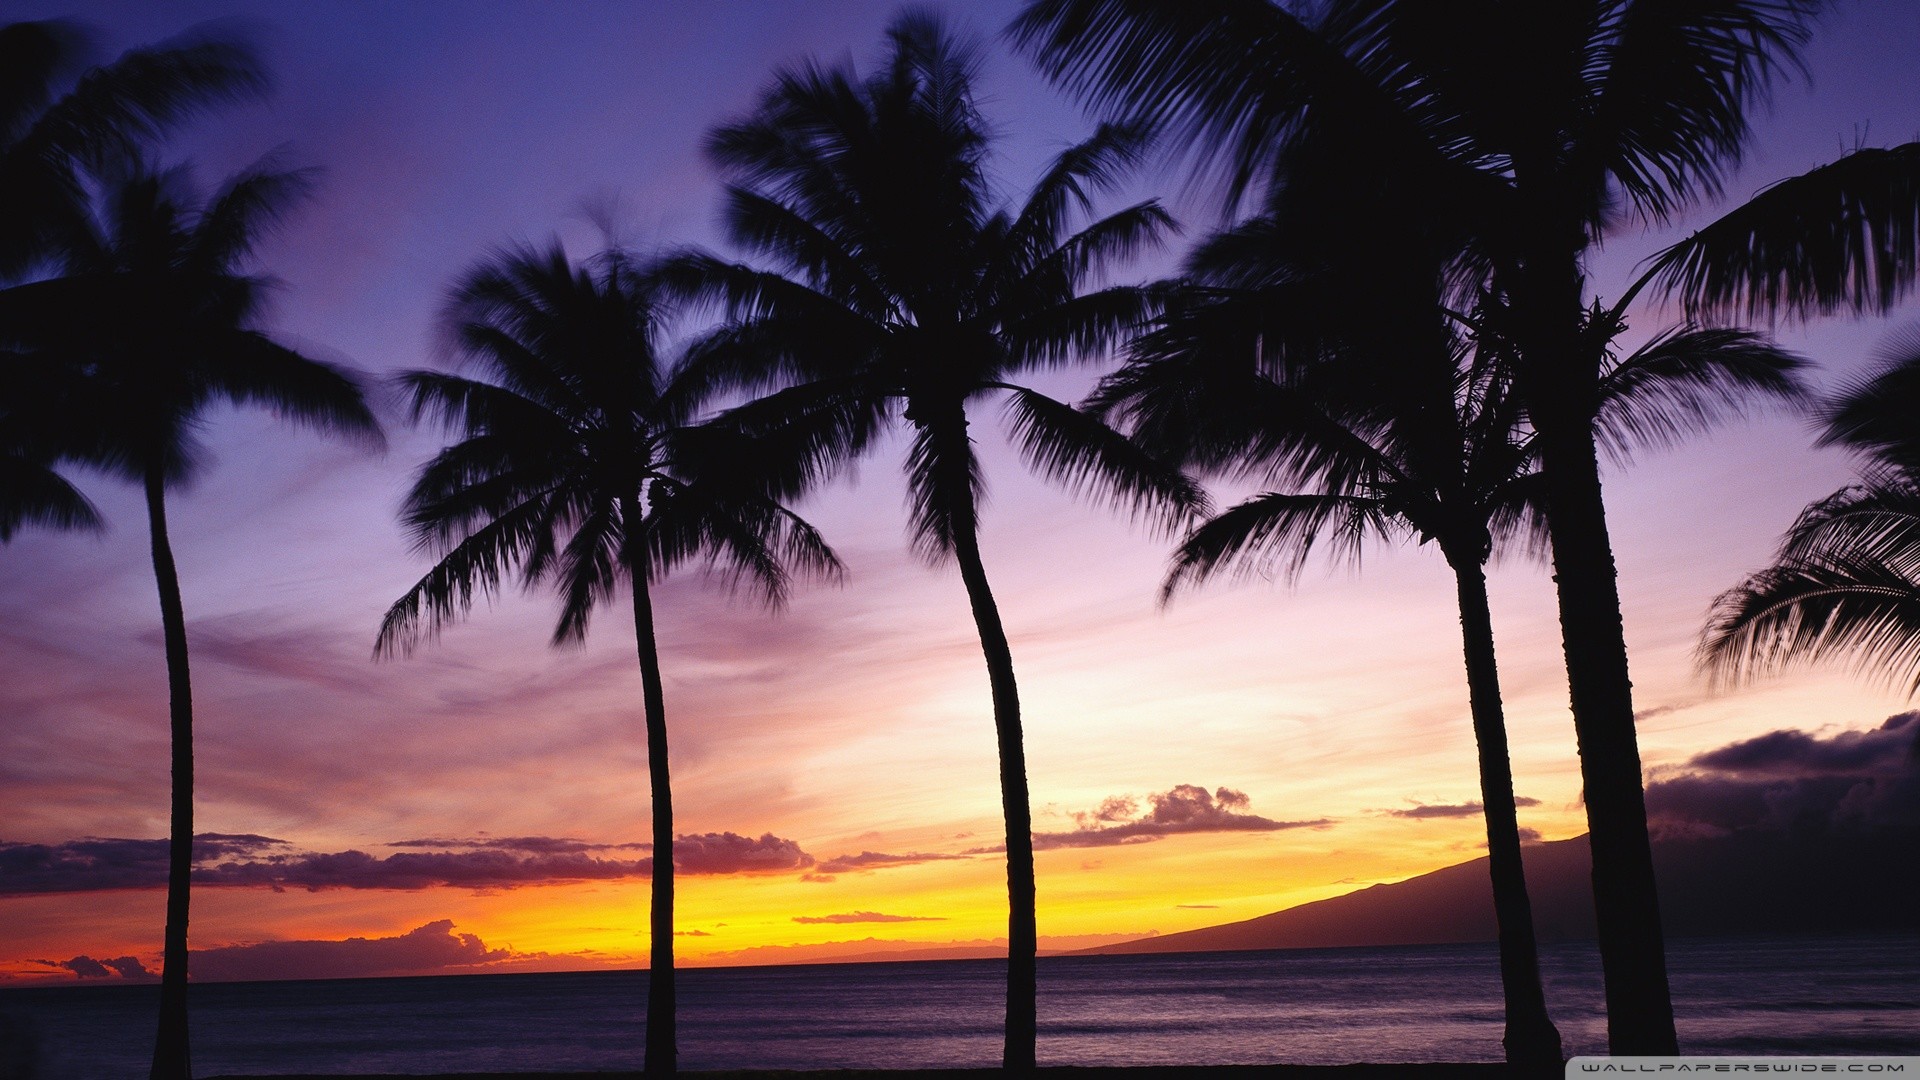 1920x1080 Beach Sunset With Palm Trees Wallpaper Free Desktop